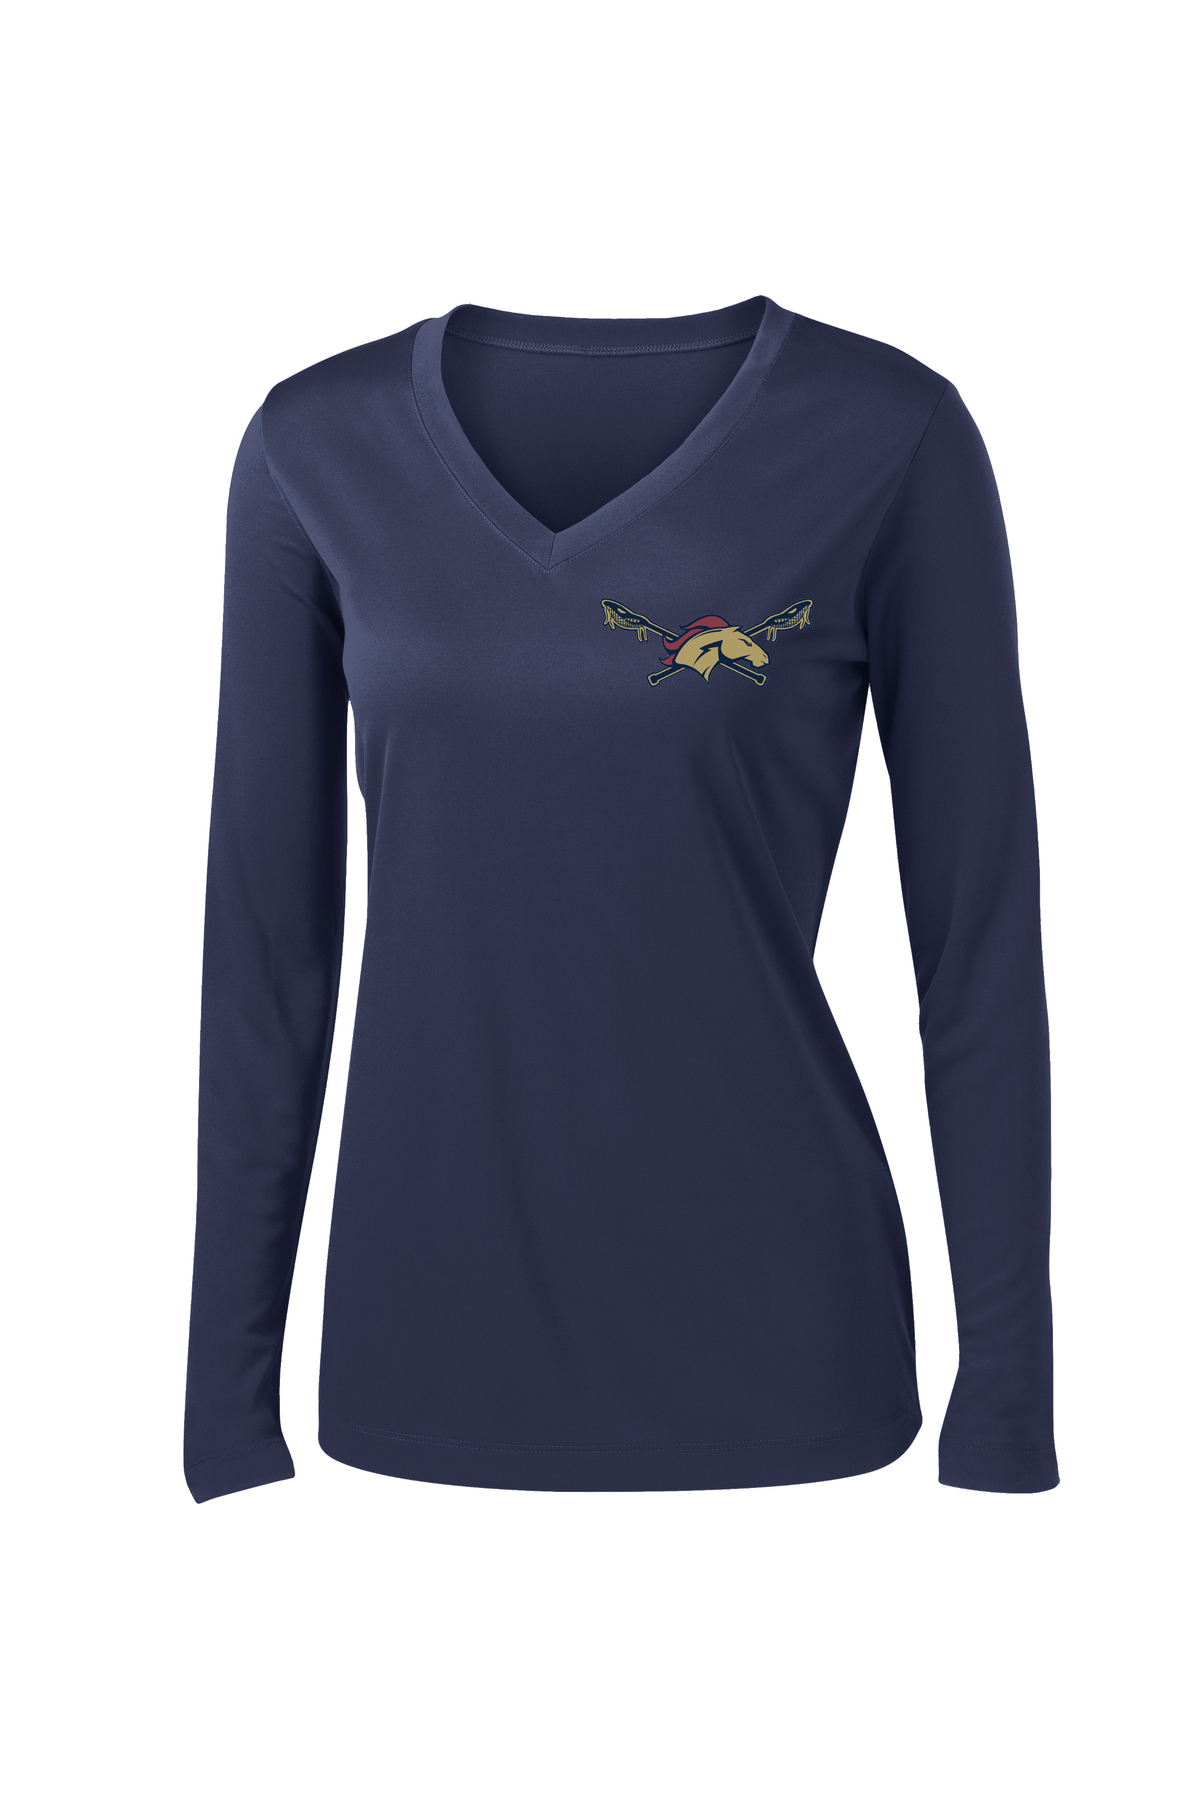 Herriman Lacrosse Navy Women's Long Sleeve Performance Shirt